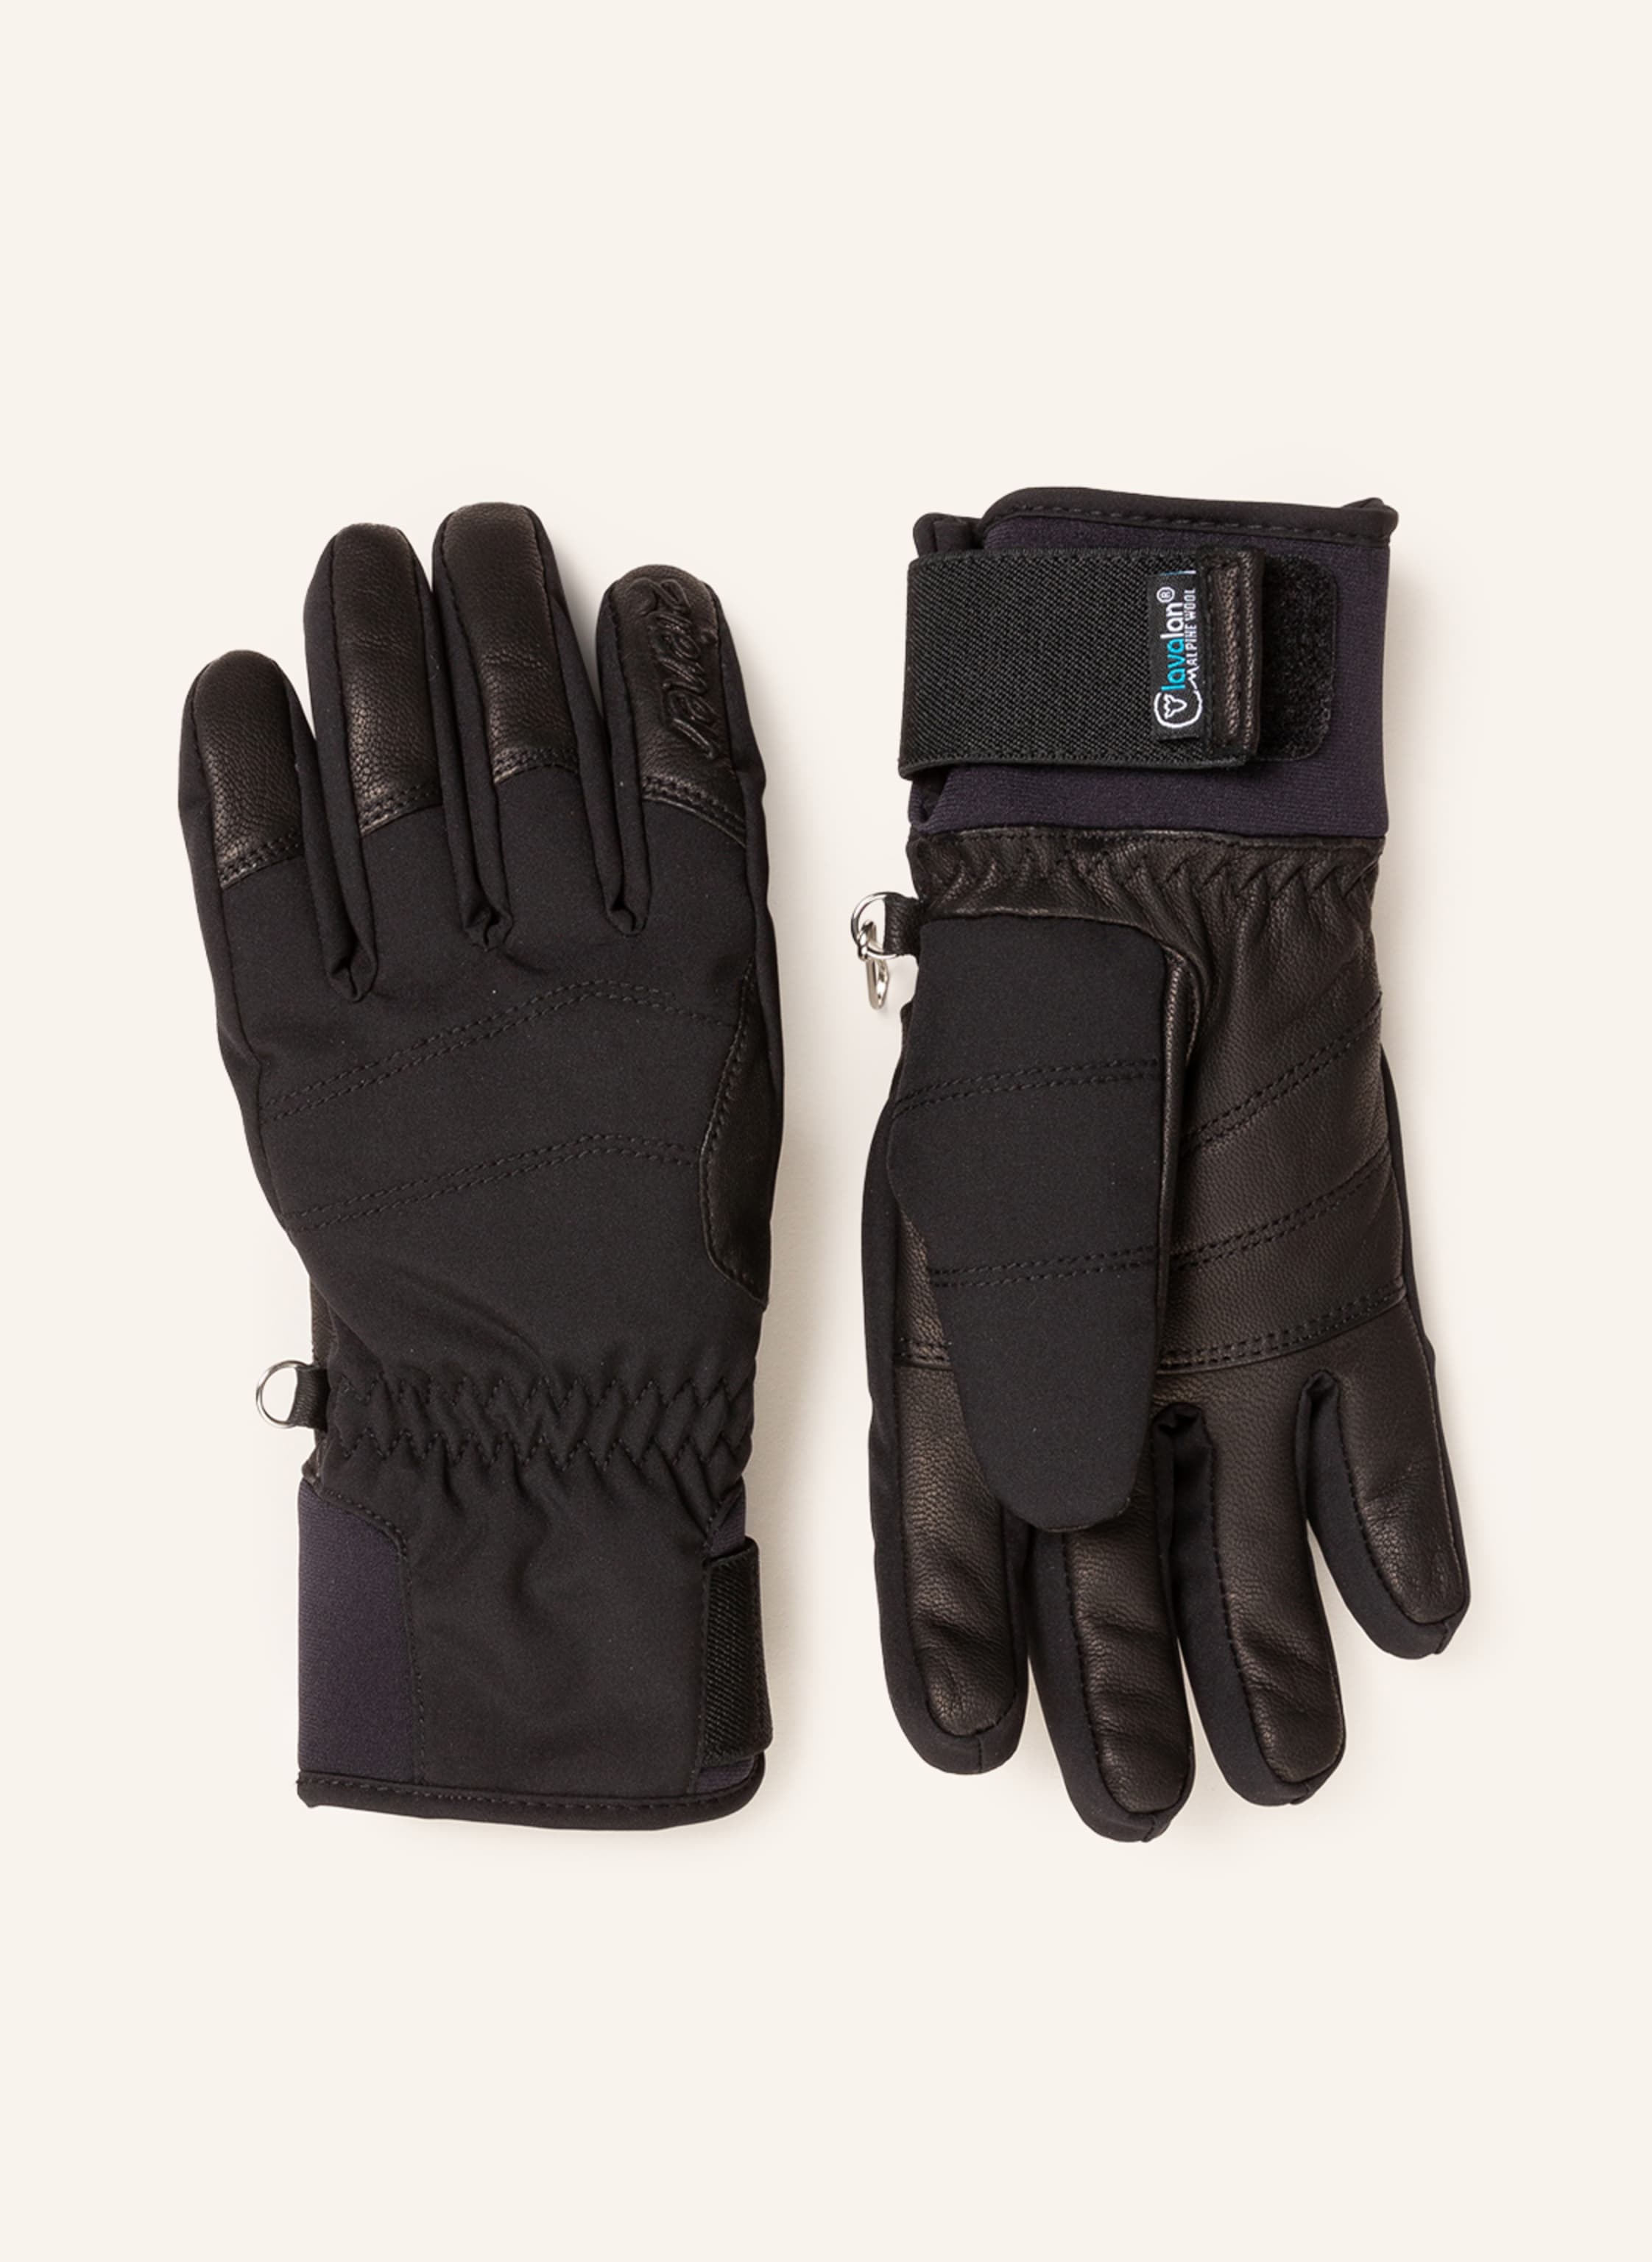 ziener KALE in black Ski AS® gloves